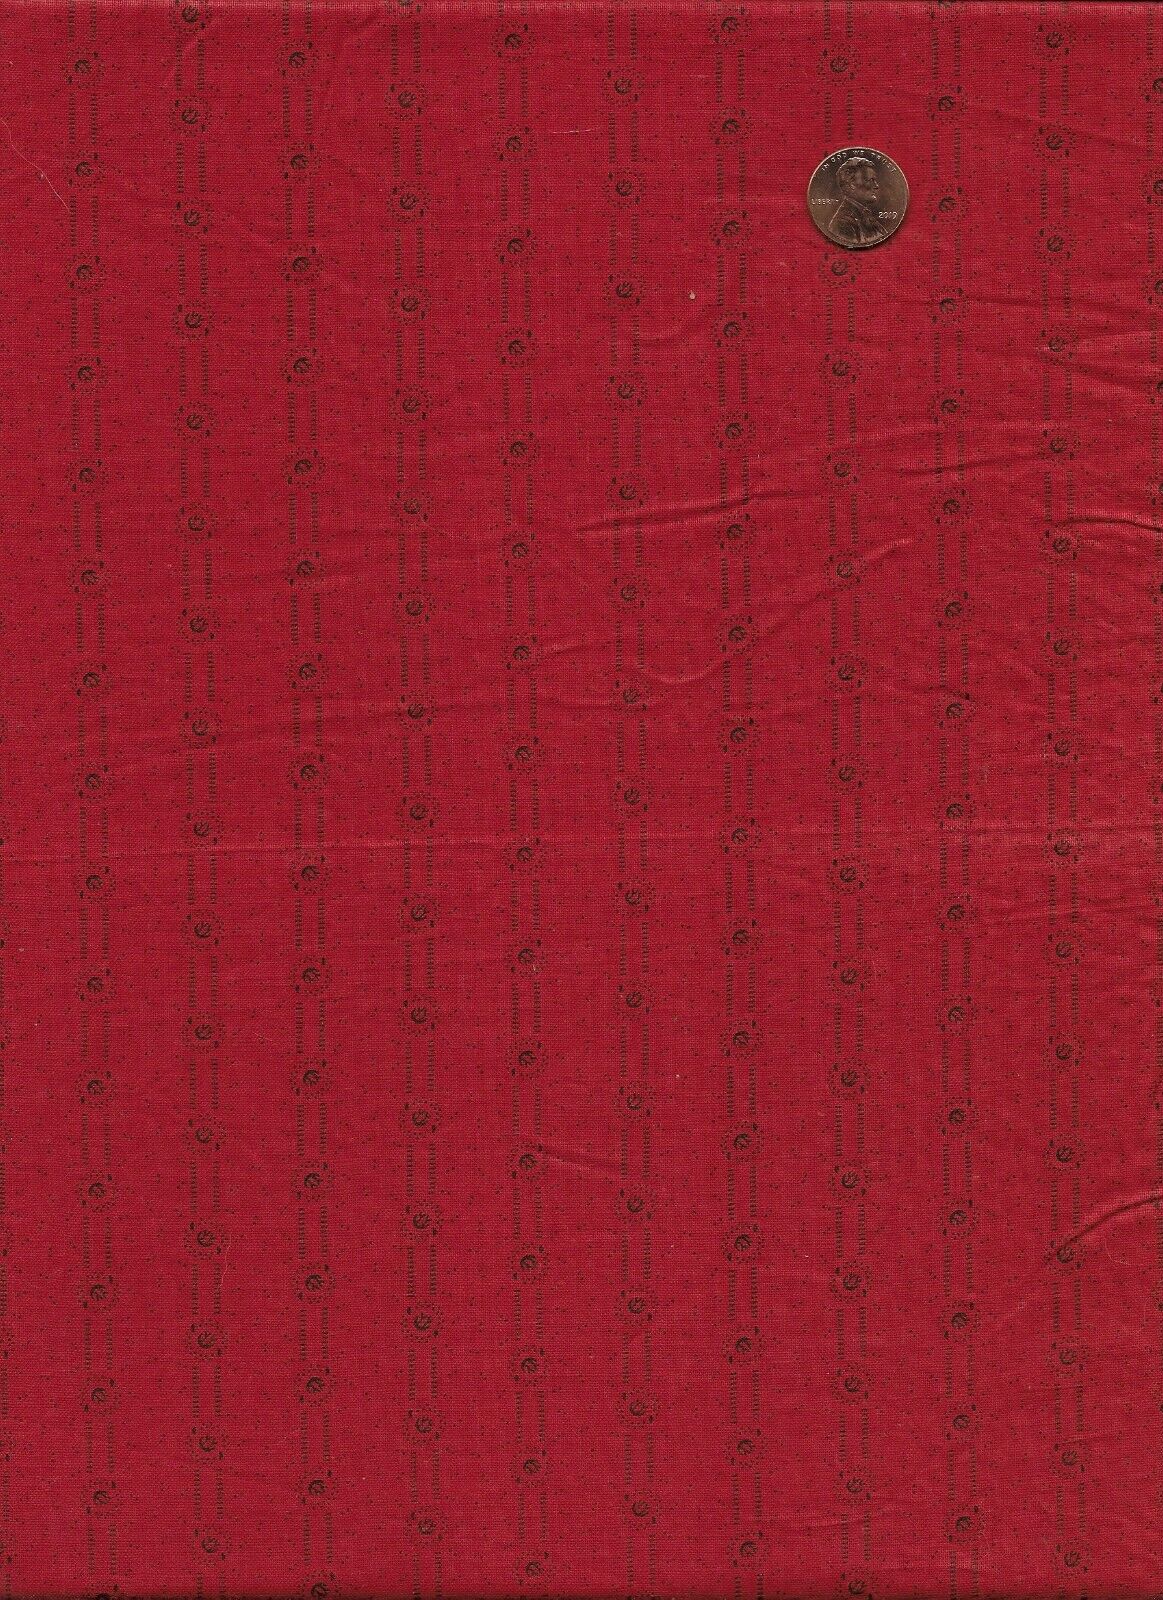 Antique 1870 Red and Black Geometric Stripe Fabric